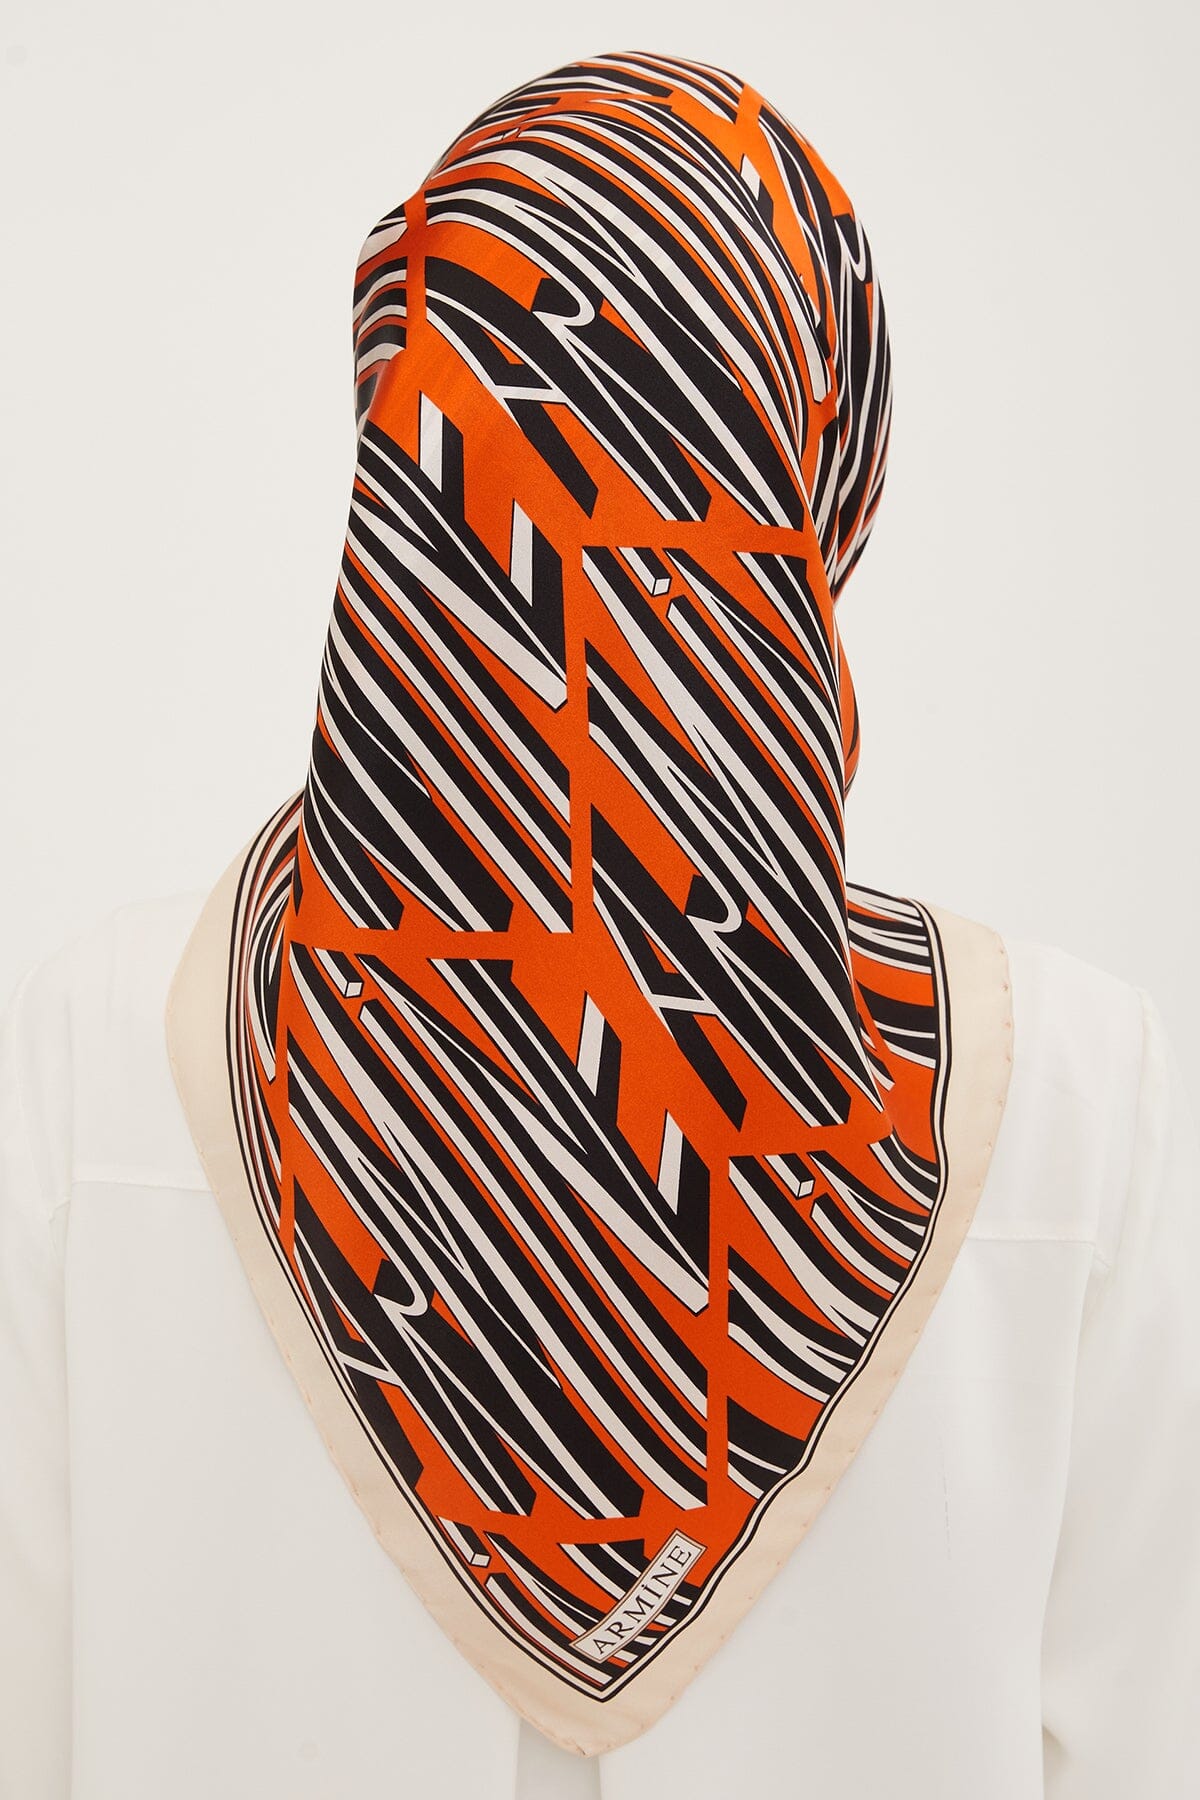 Armine Linear Square Silk Scarf #9 Silk Hijabs,Armine Armine 